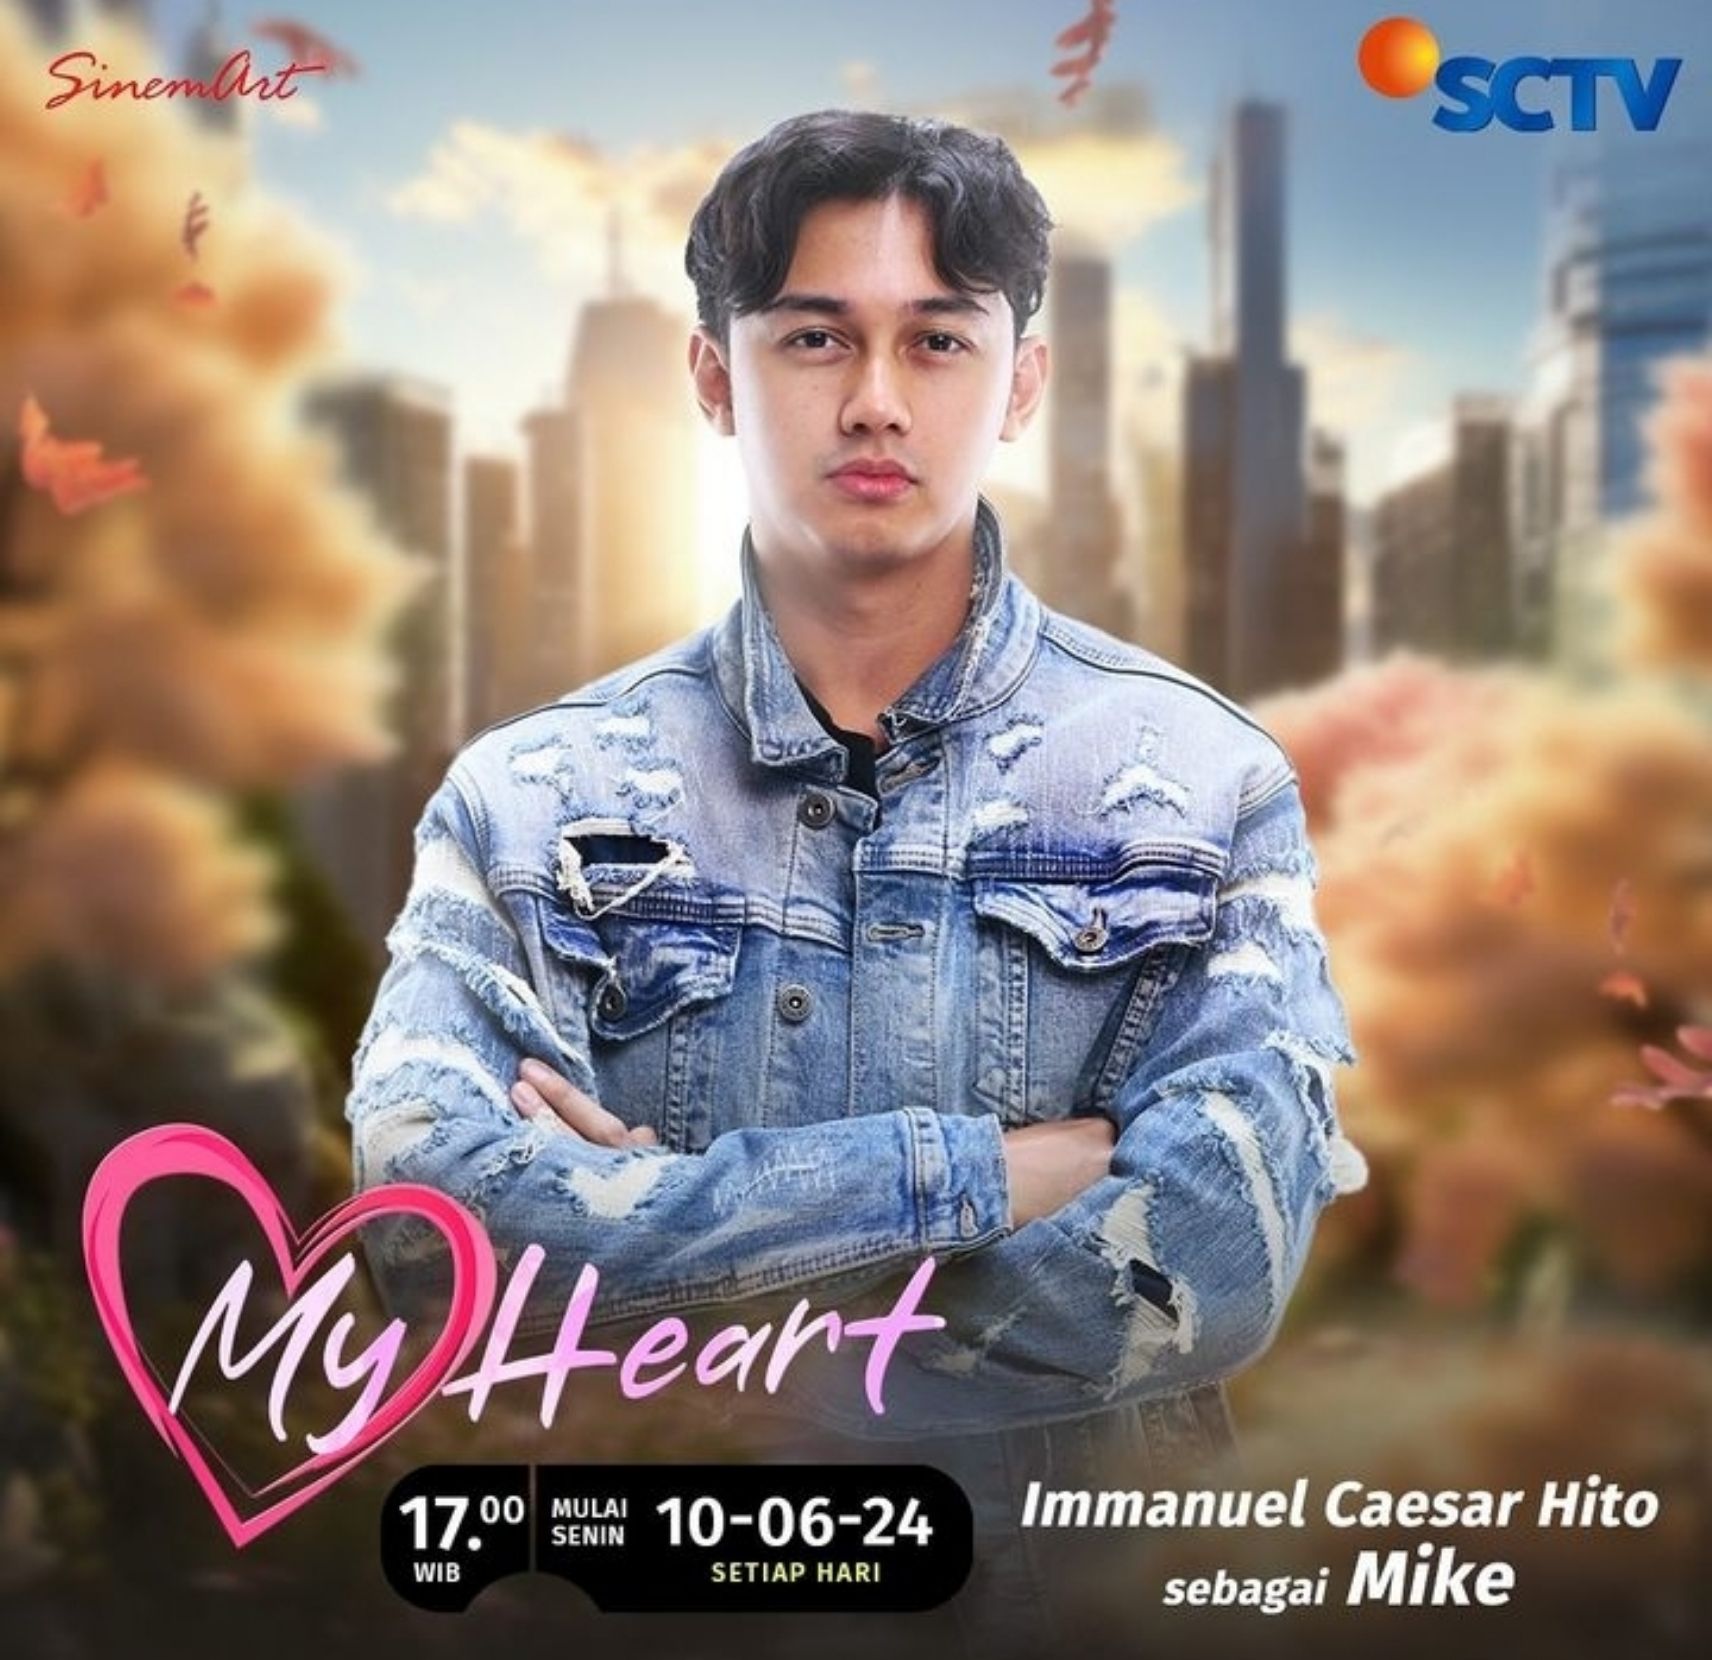 Caesar Hito sebagai Mike di Sinetron My Heart SCTV 